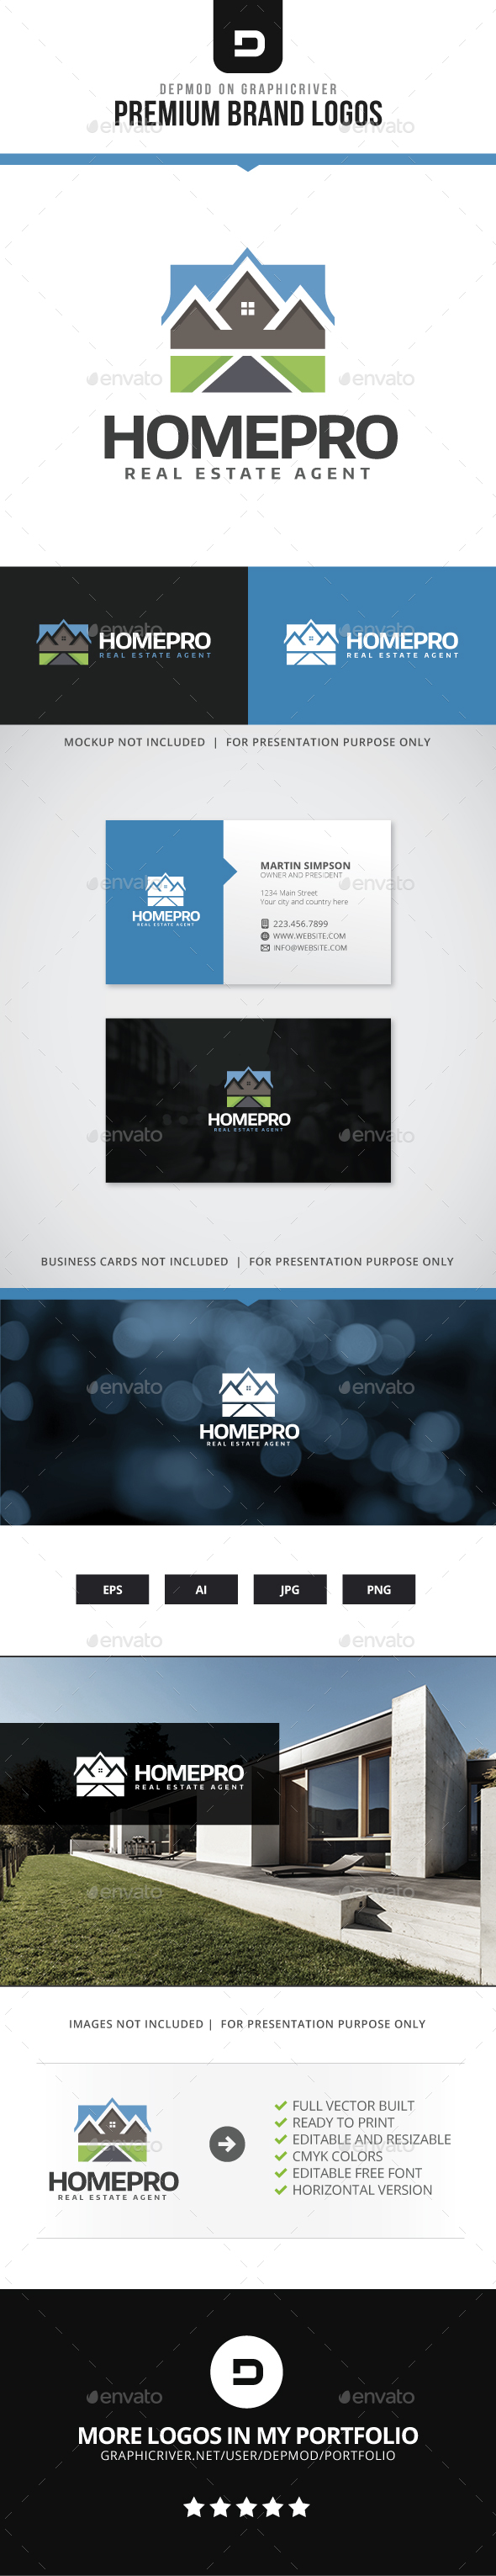 HomePro Logo